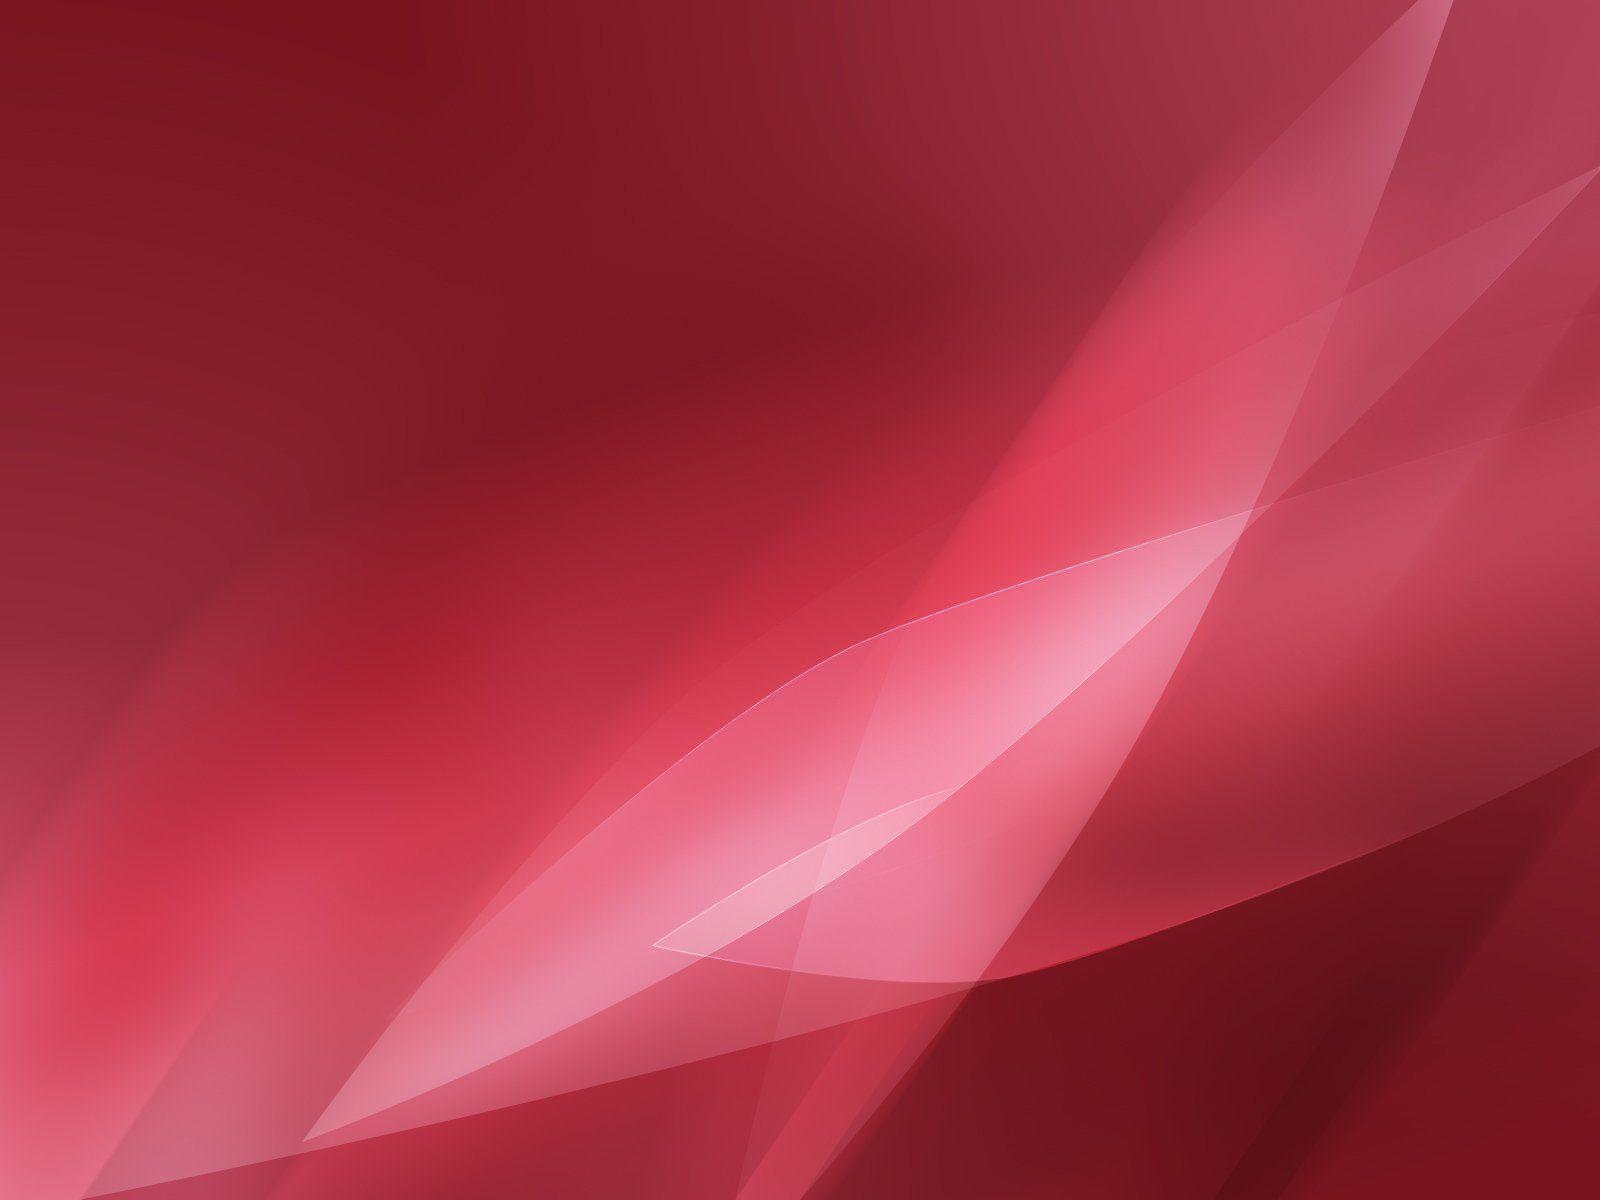 The Best Top Desktop Red Wallpaper Red Wallpaper Red Background